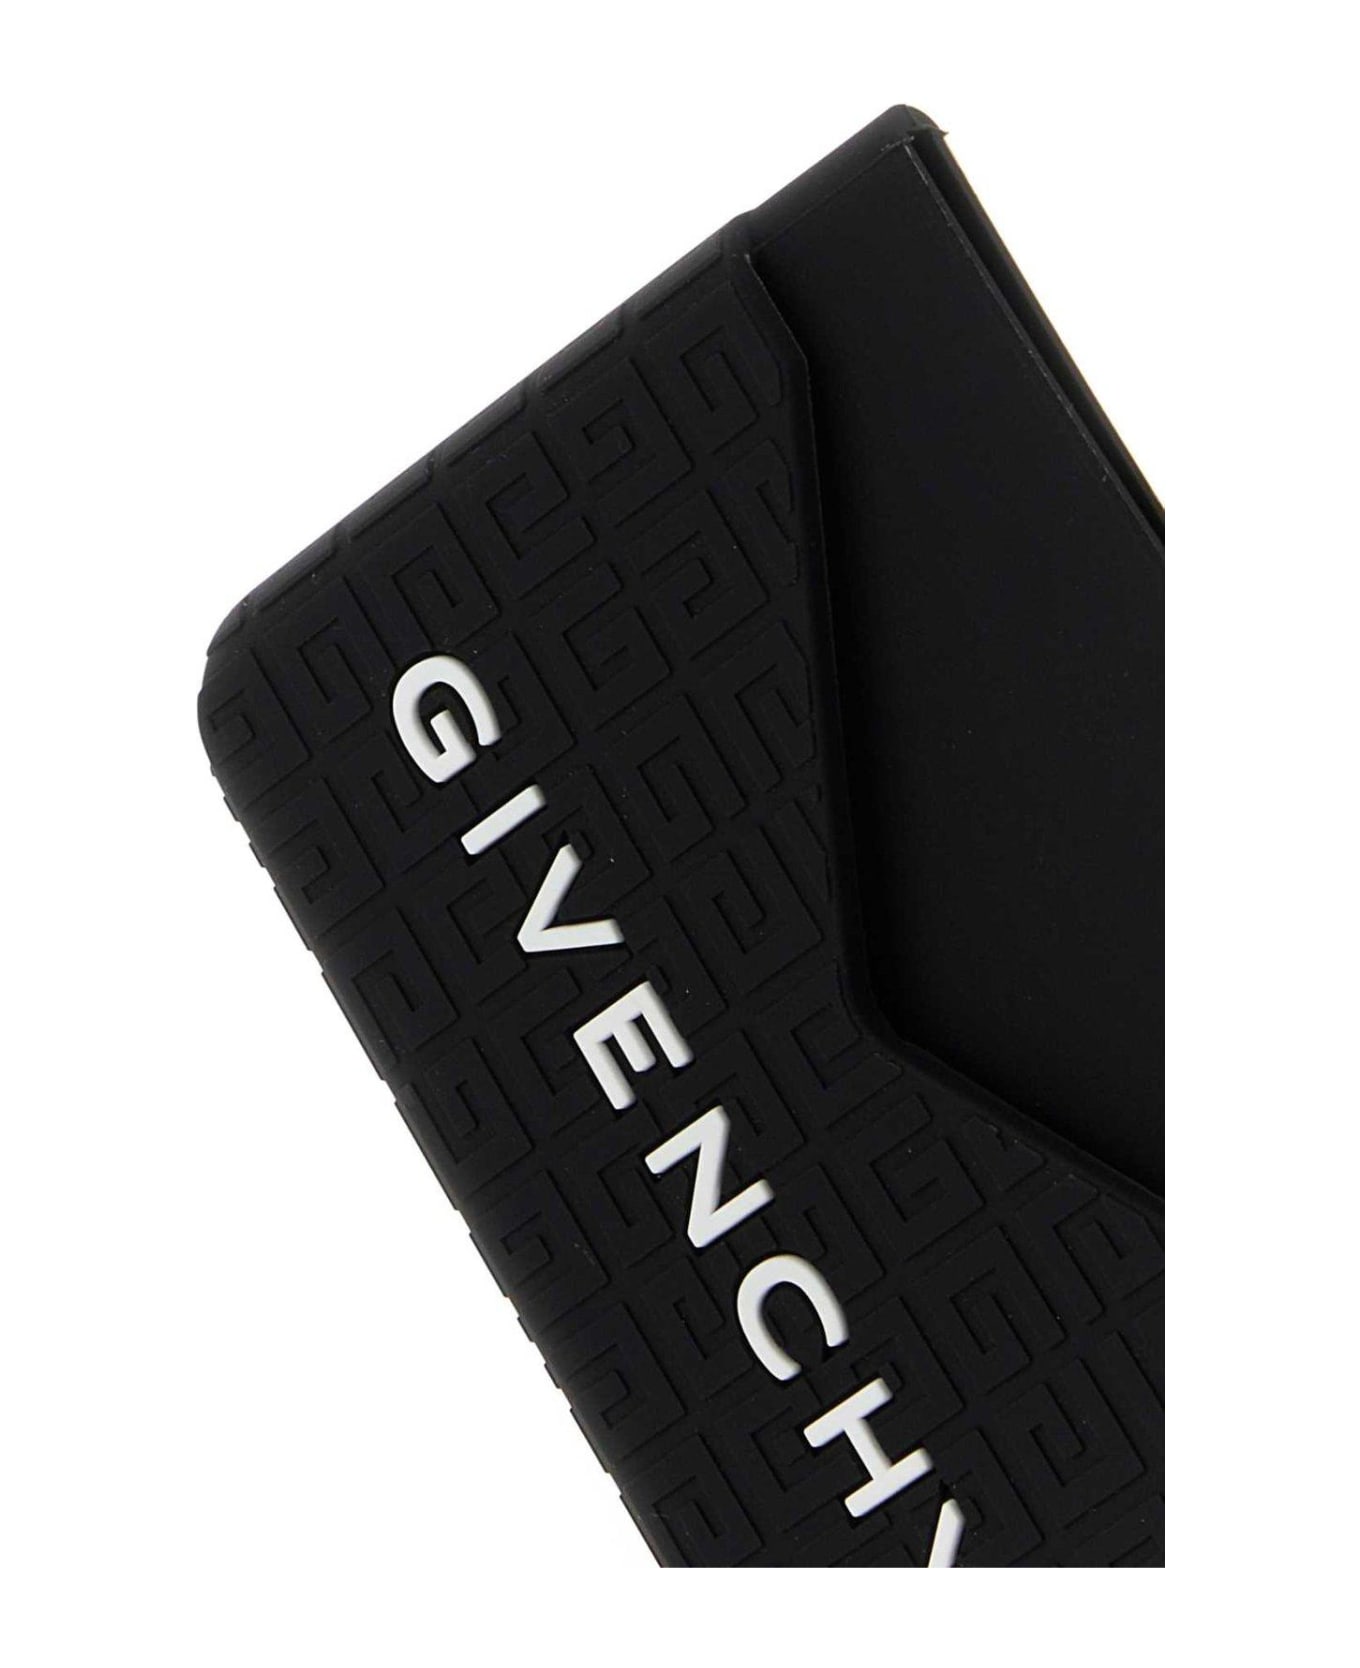 Givenchy 4g Logo Printed Card Holder - Black 財布